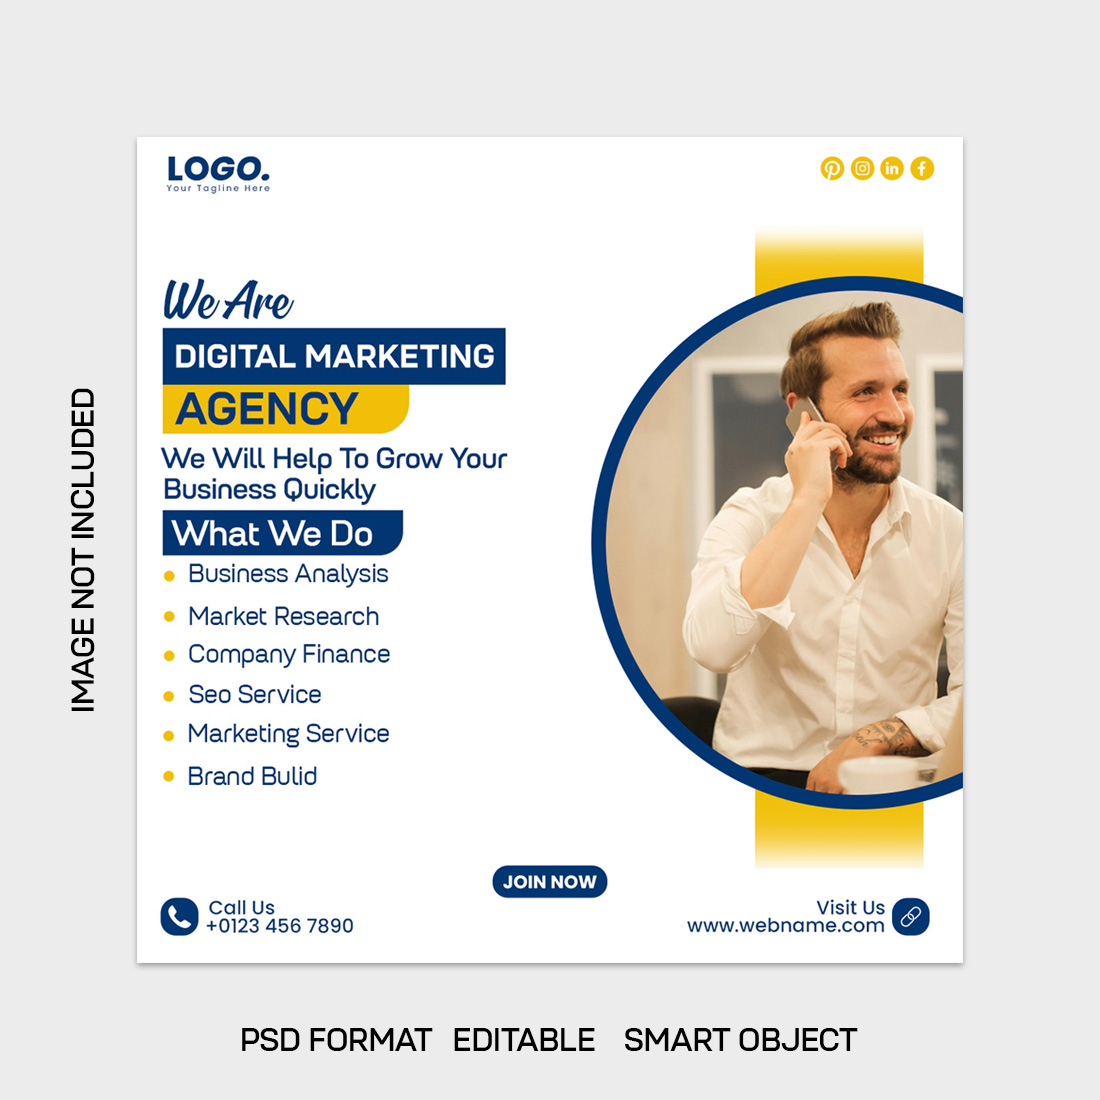 Digital Marketing Social Media Post Design cover image.